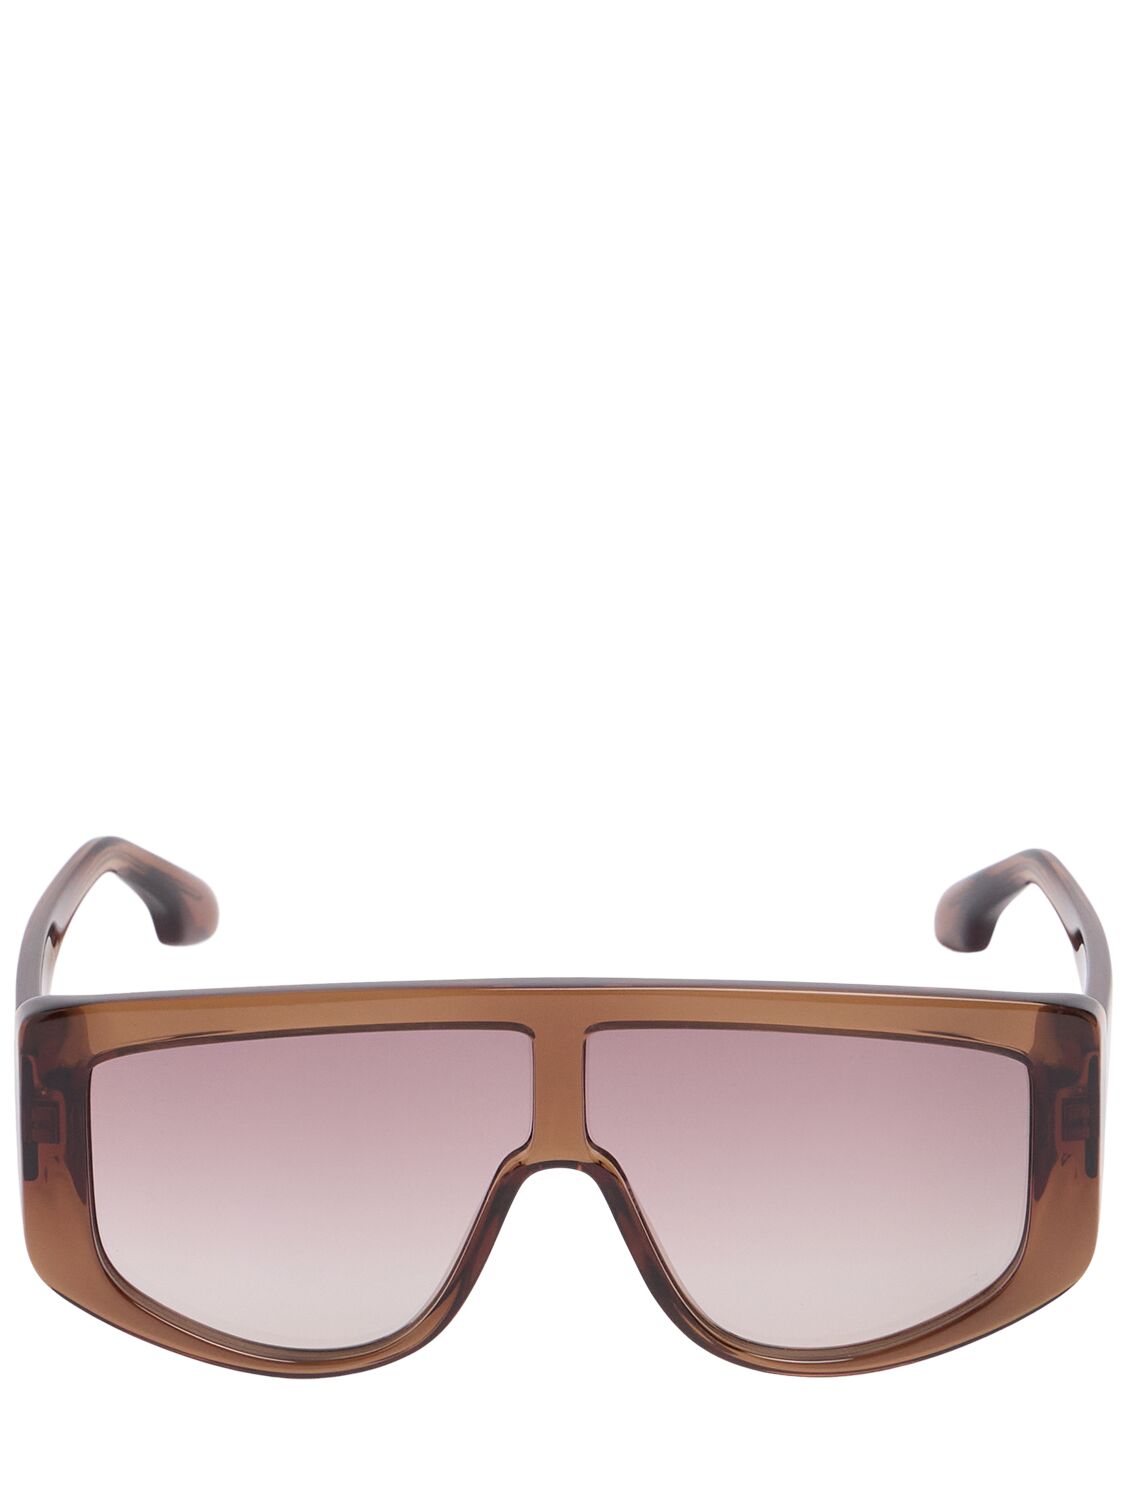 Victoria Beckham Denim Acetate Sunglasses In Olive Green